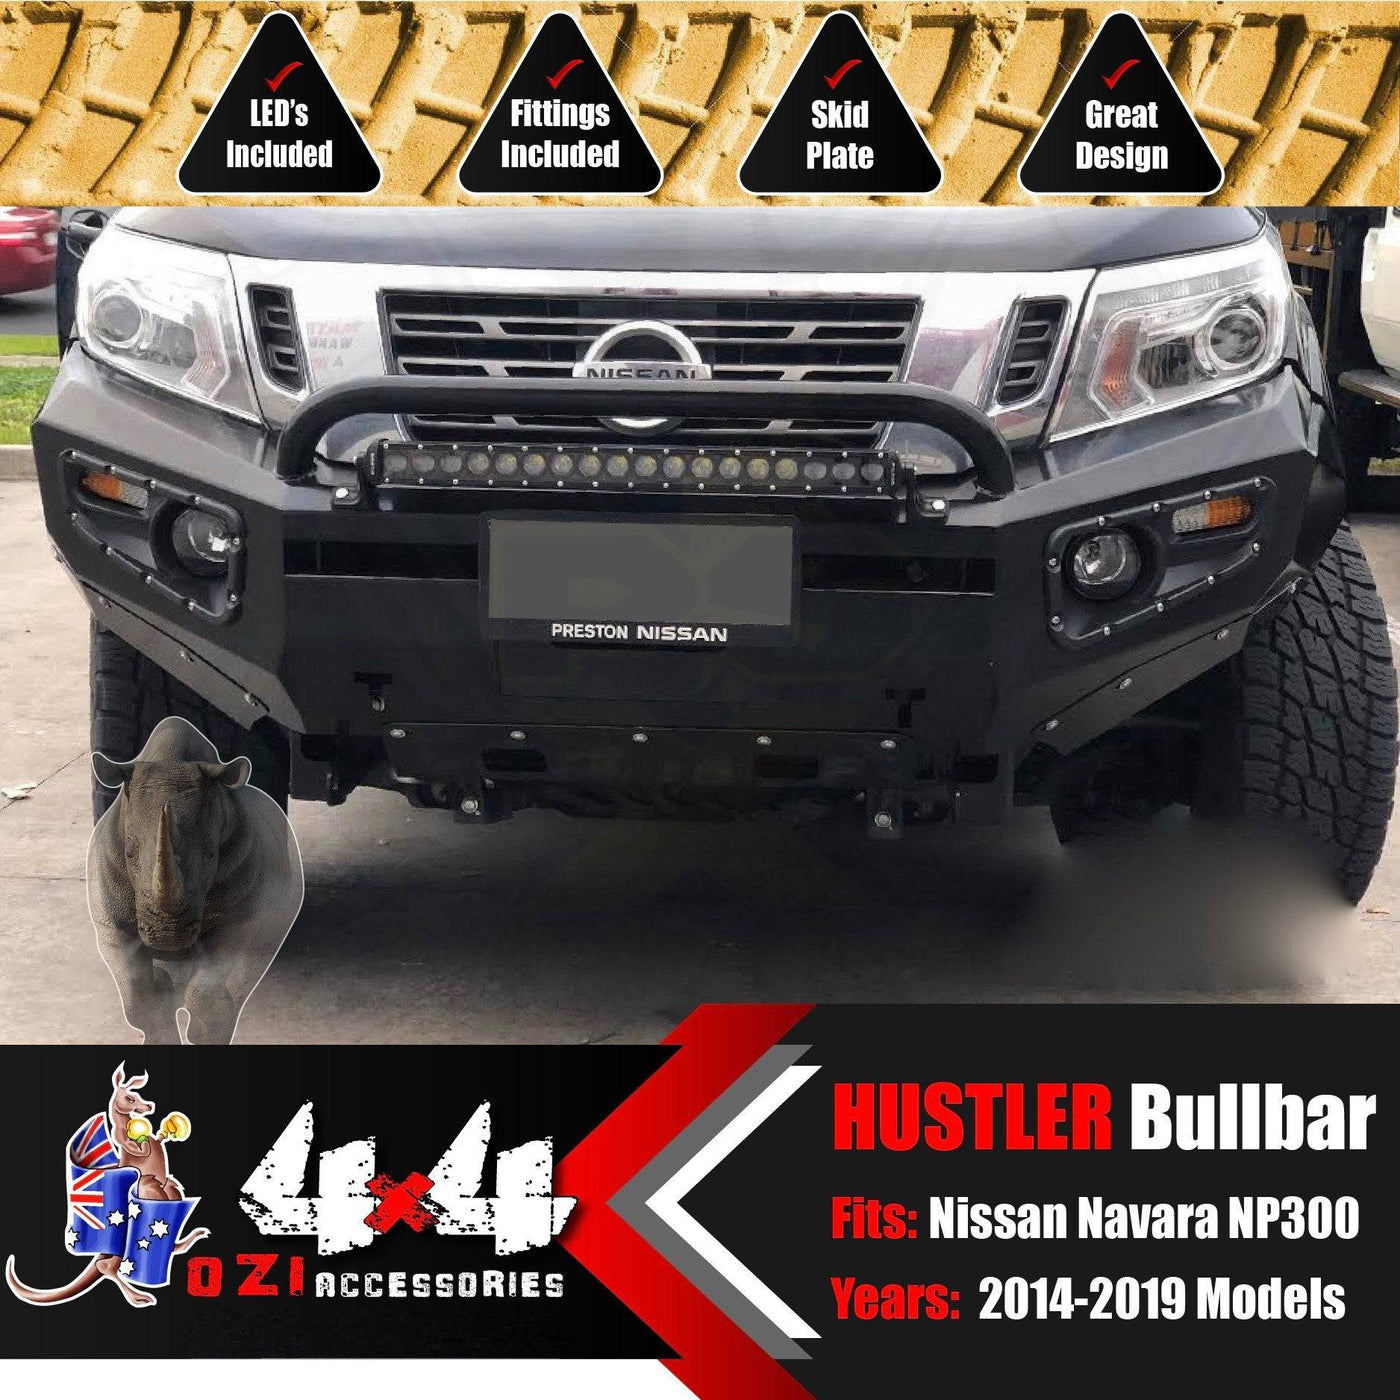 Commercial Hustler Bullbar Suits Nissan NP300 2015-2020